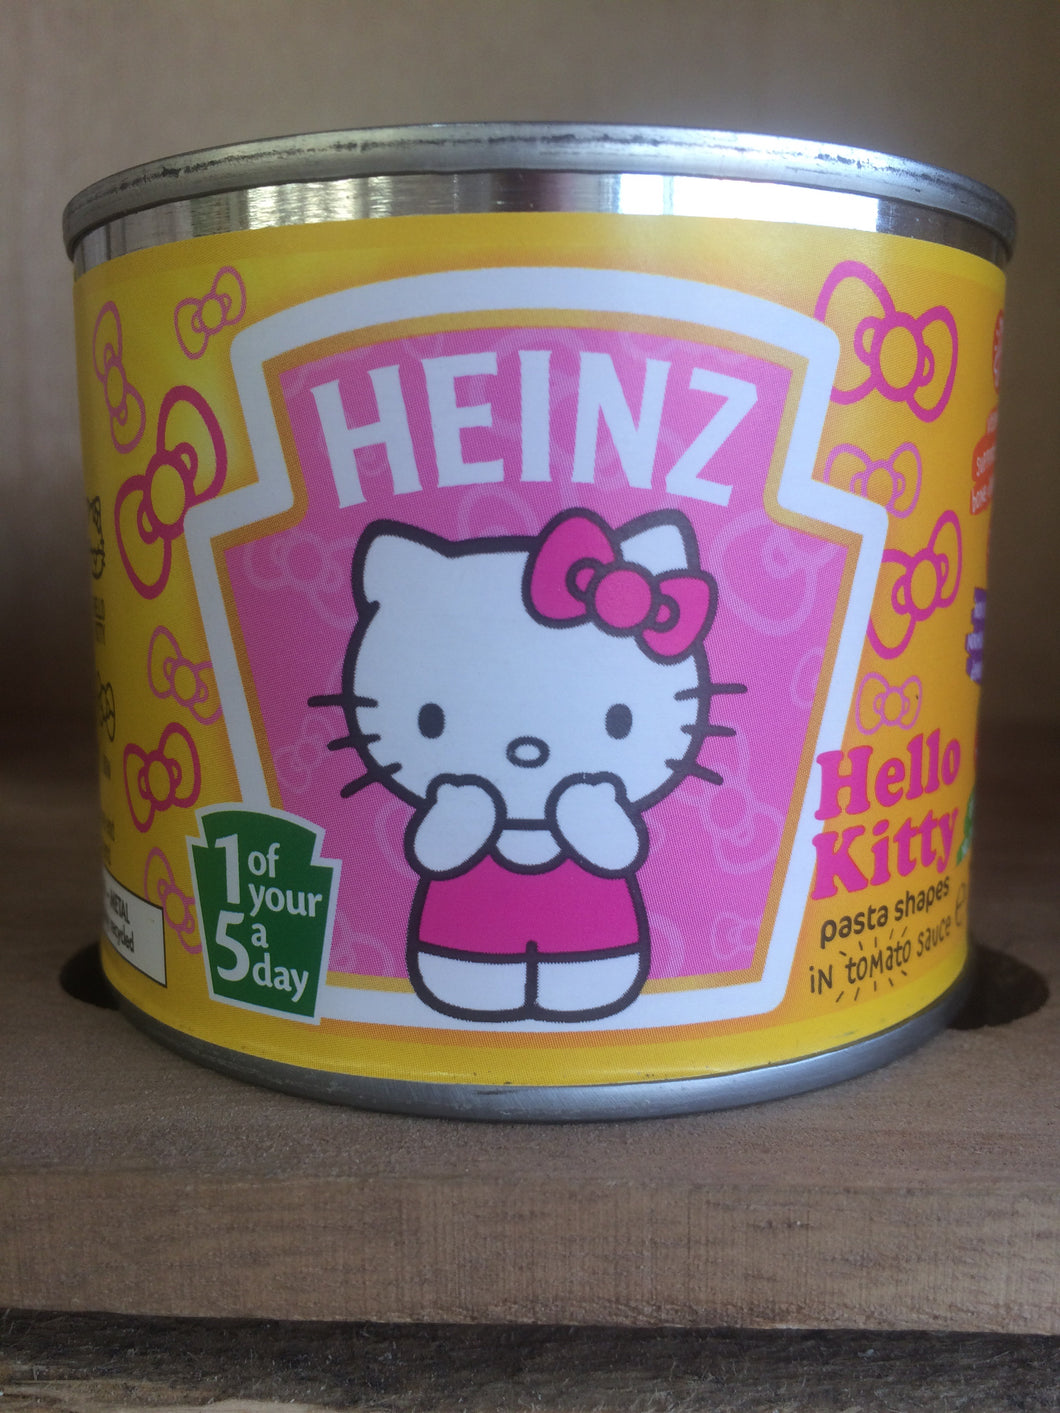 Heinz Hello Kitty Pasta Shapes in Tomato Sauce 205g